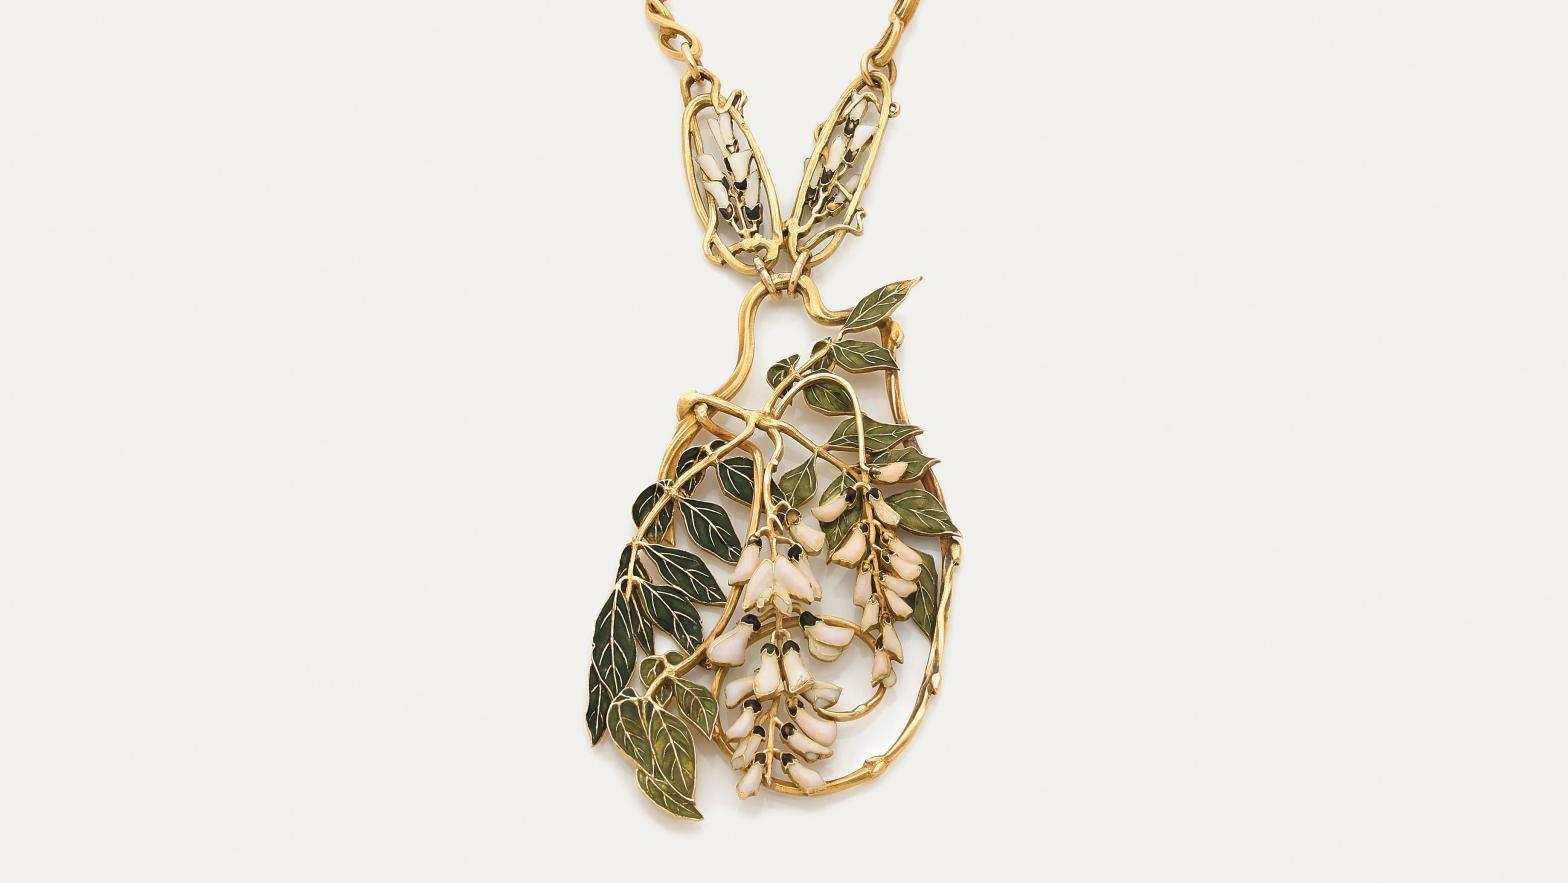 René Lalique (1860-1945), "Wisteria" pendant and chain, c. 1899-1901, 18 ct yellow... Lalique in Precious Settings 